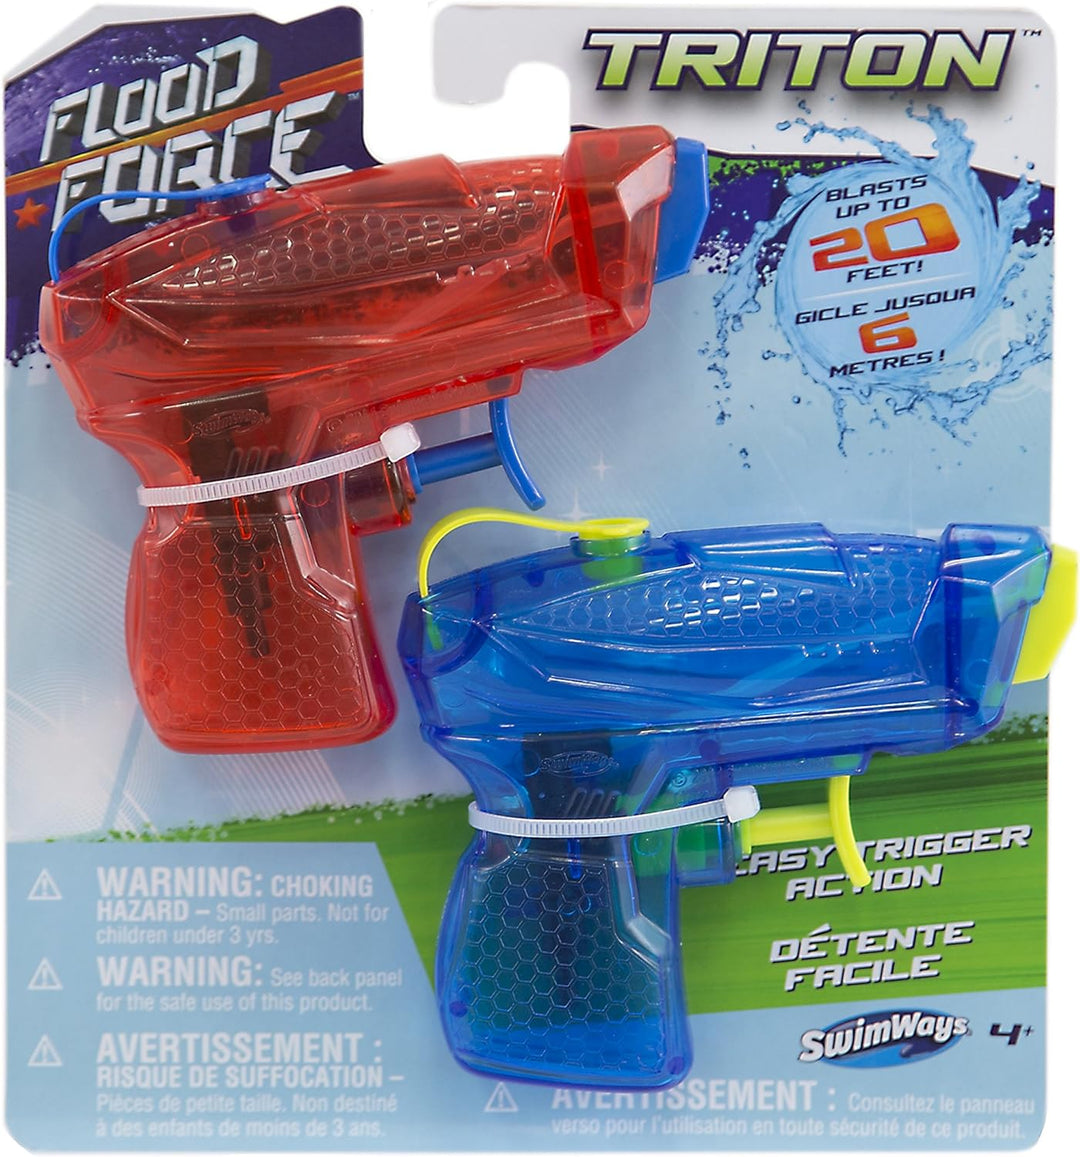 Flood Force Triton Water Guns